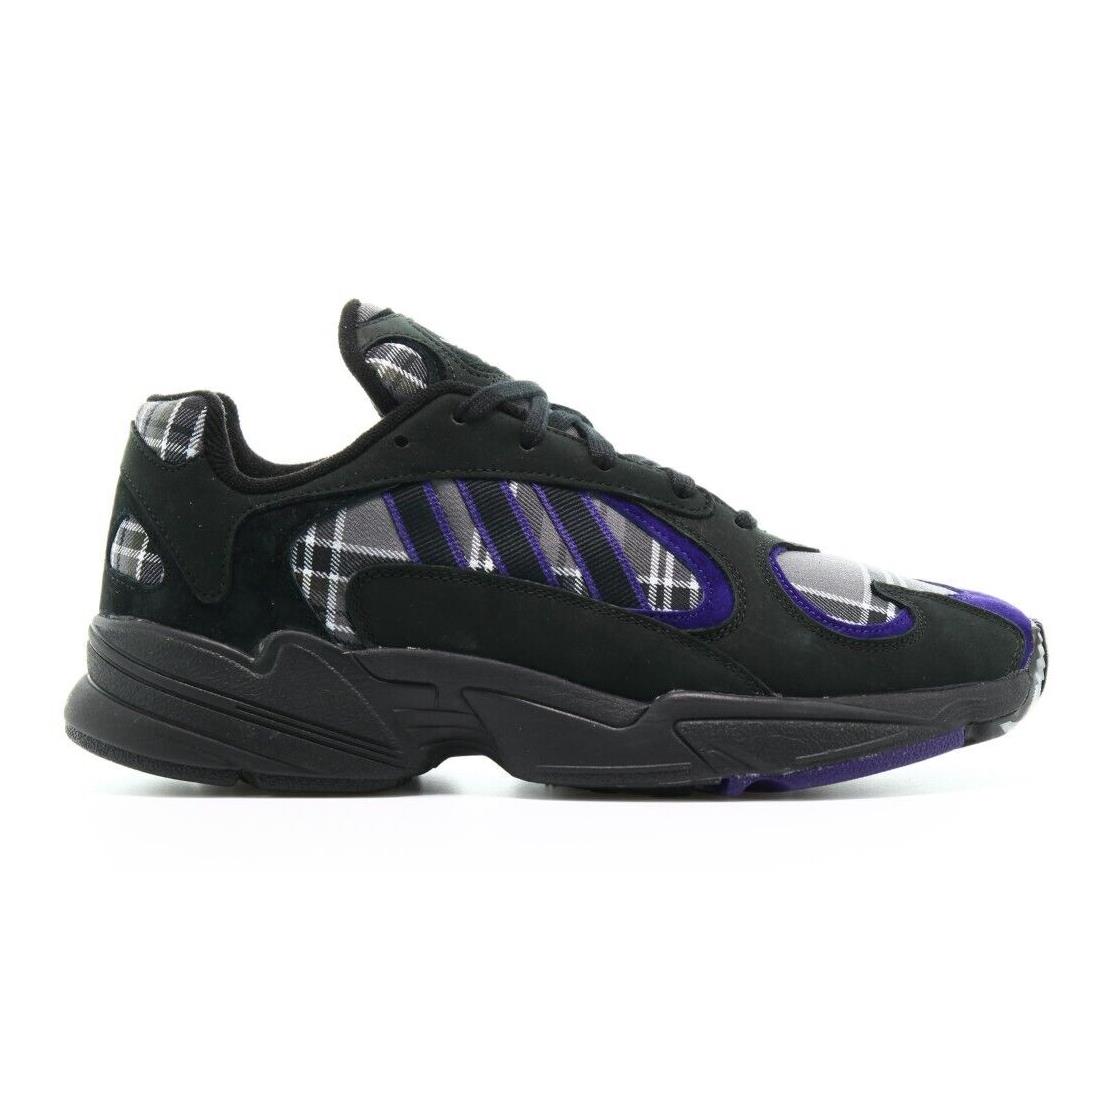 Adidas Yung-1 Size 7 Black/grey/purple Vintage Inspired Running Shoes - CBLACK/CPURPL/CBLACK